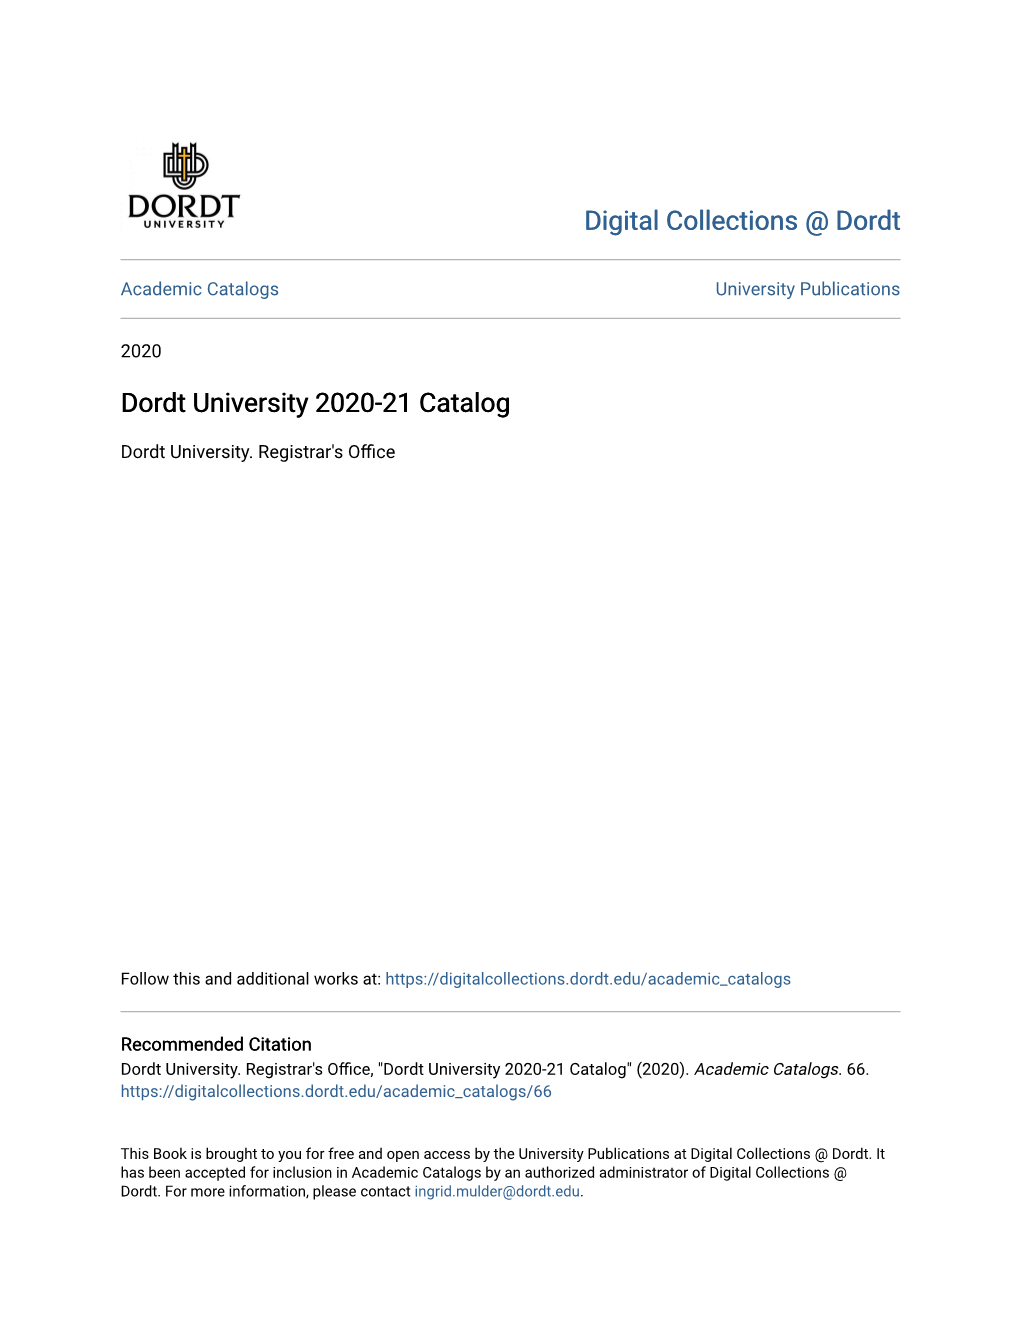 Dordt University 2020-21 Catalog